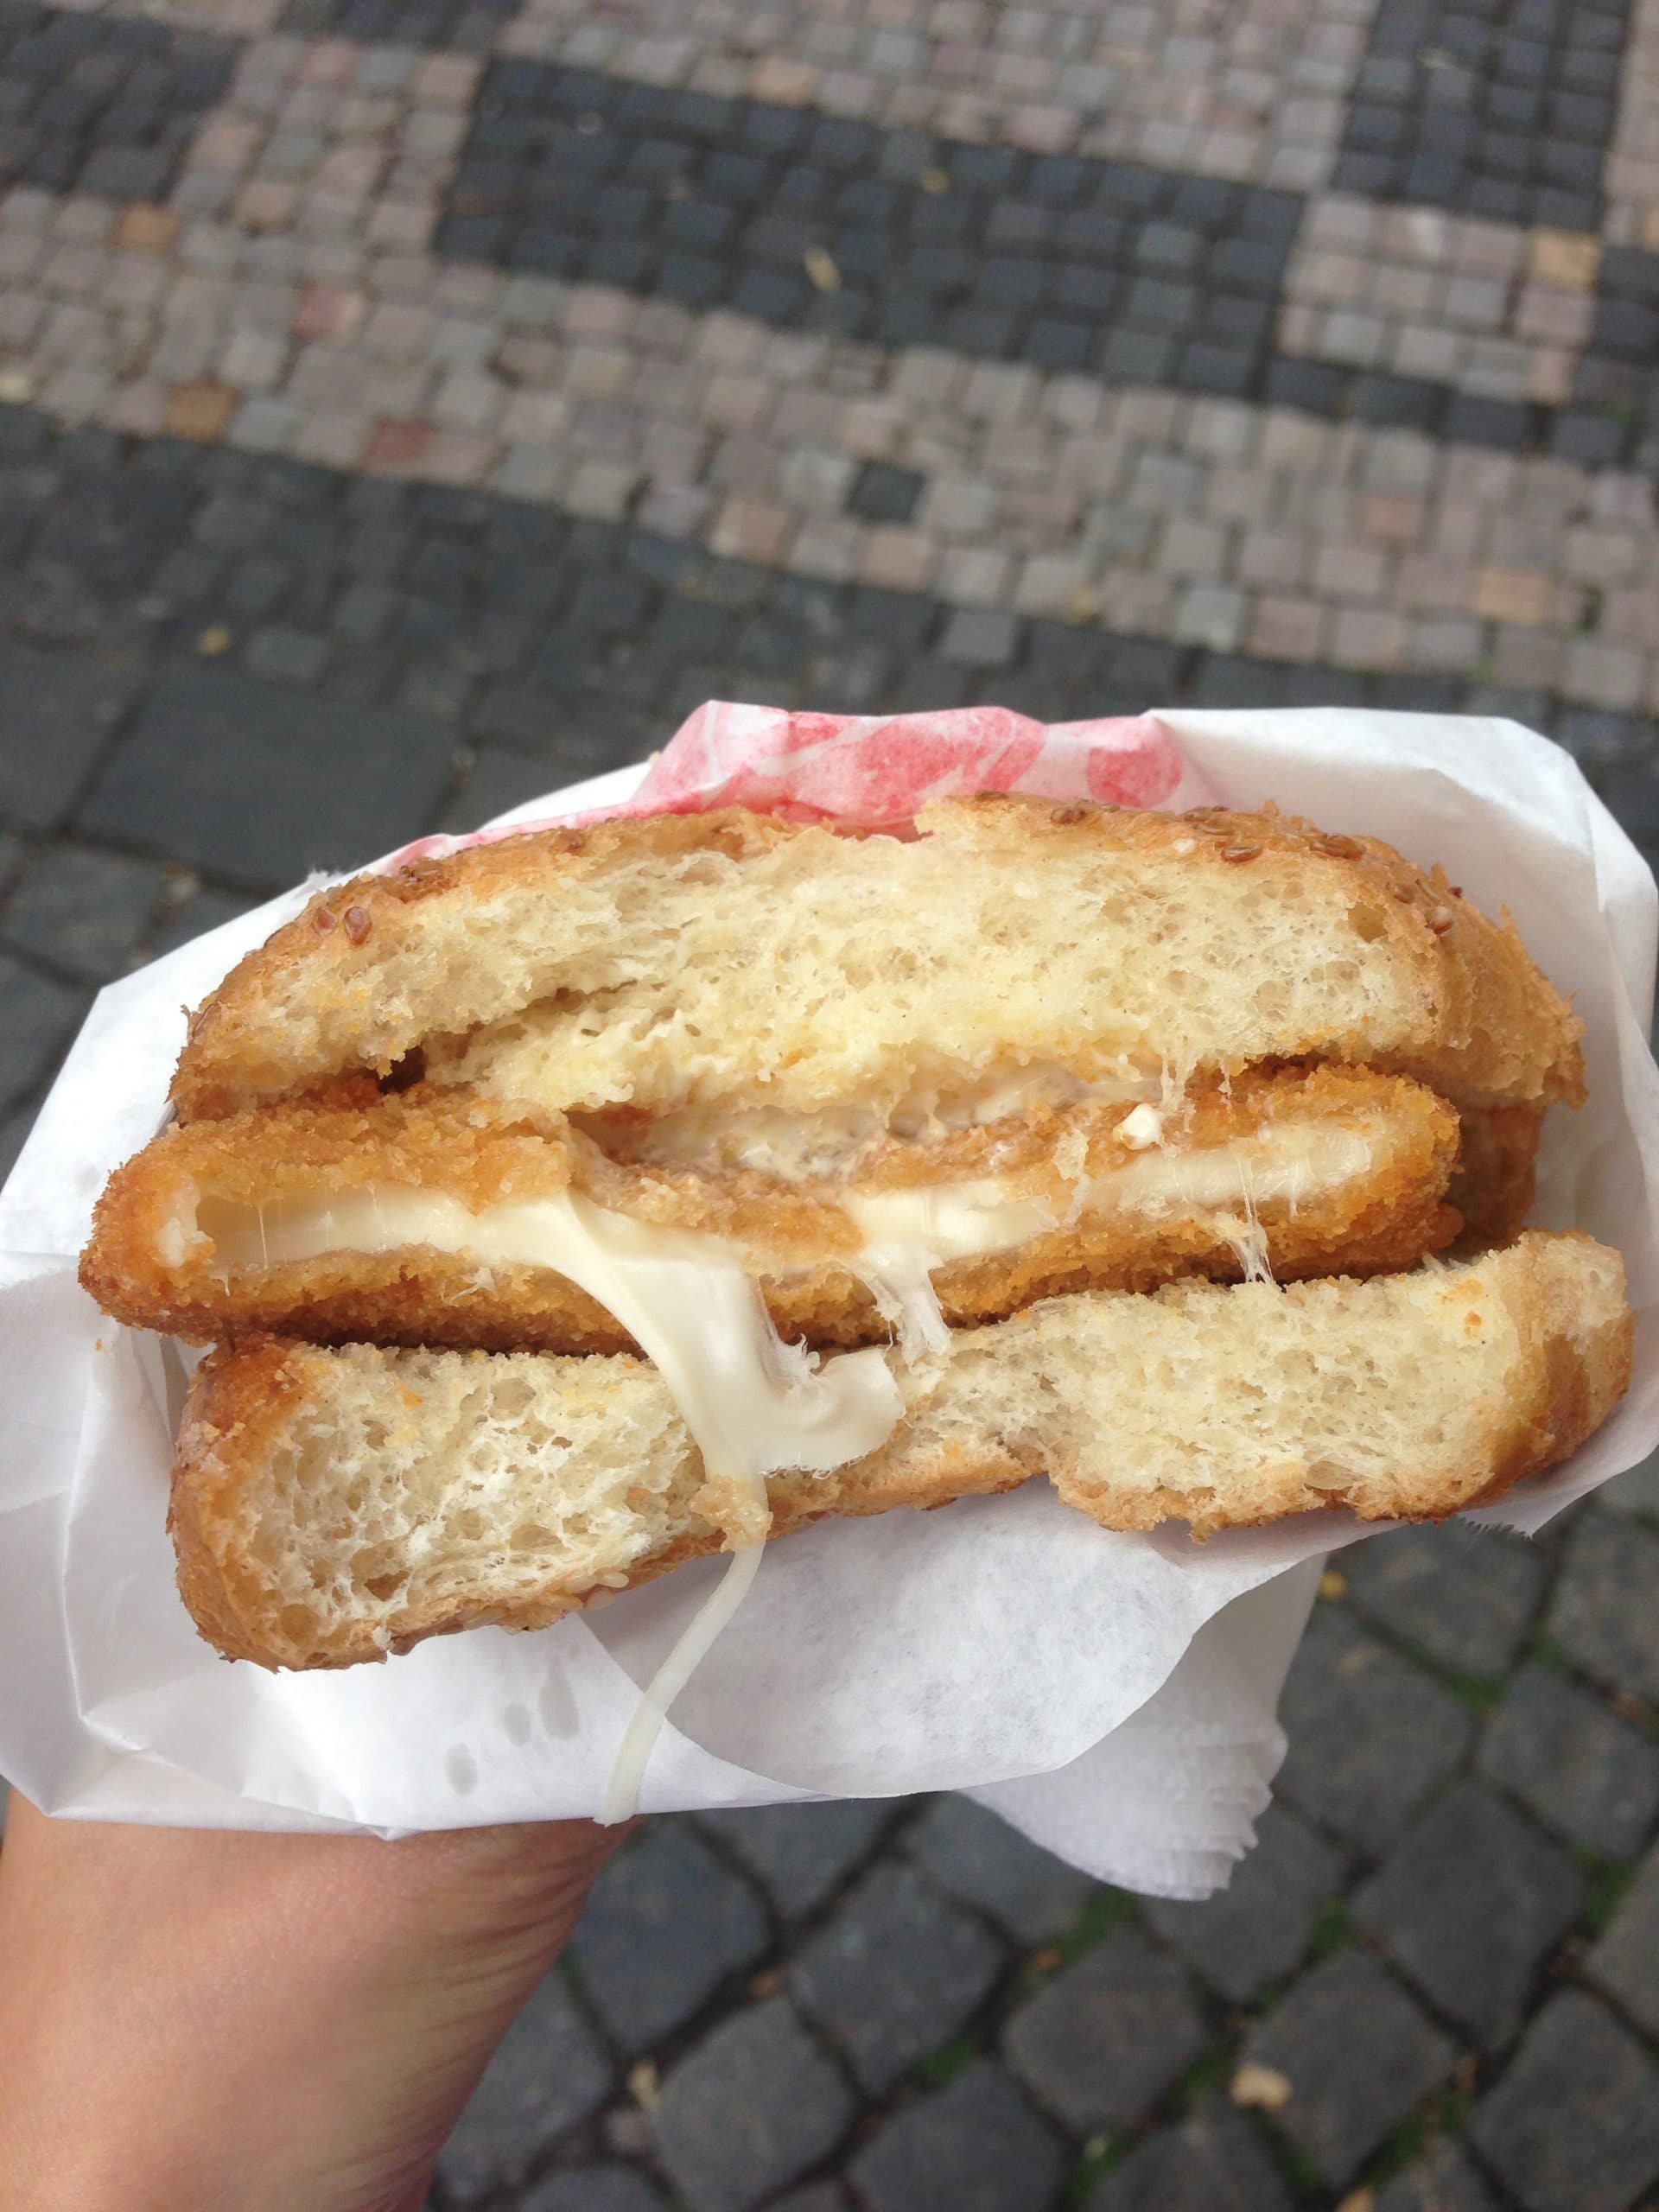 fried-cheese-sandwich-prague